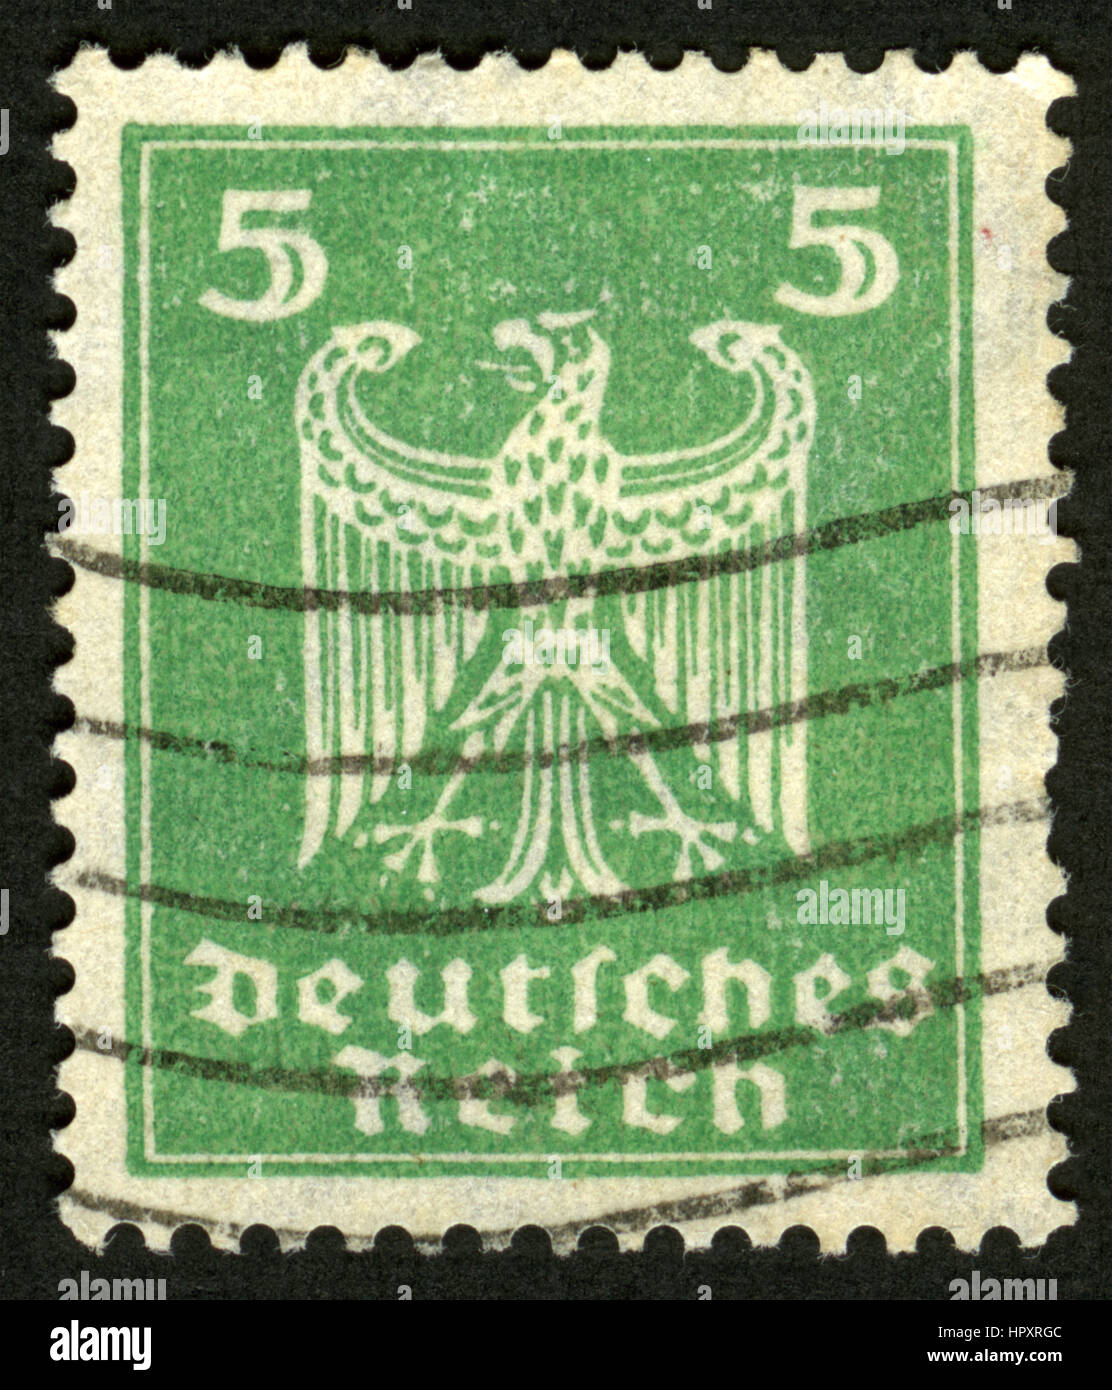 Timbre-poste : Allemagne, suis Post, mark post, timbre, timbres, 1924 Banque D'Images